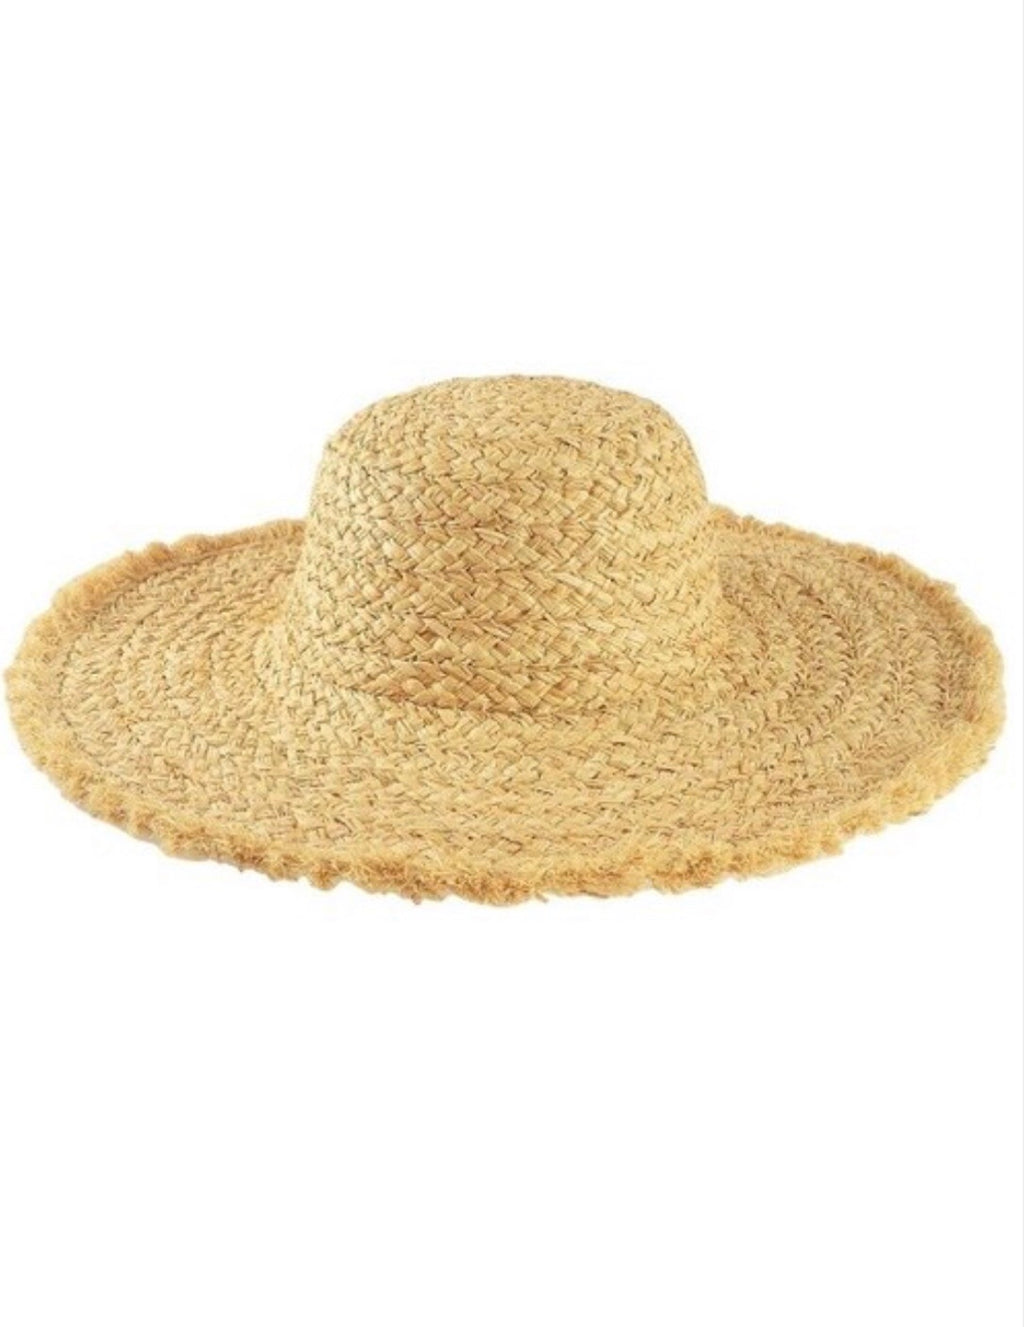 The Bahama Floppy Hat